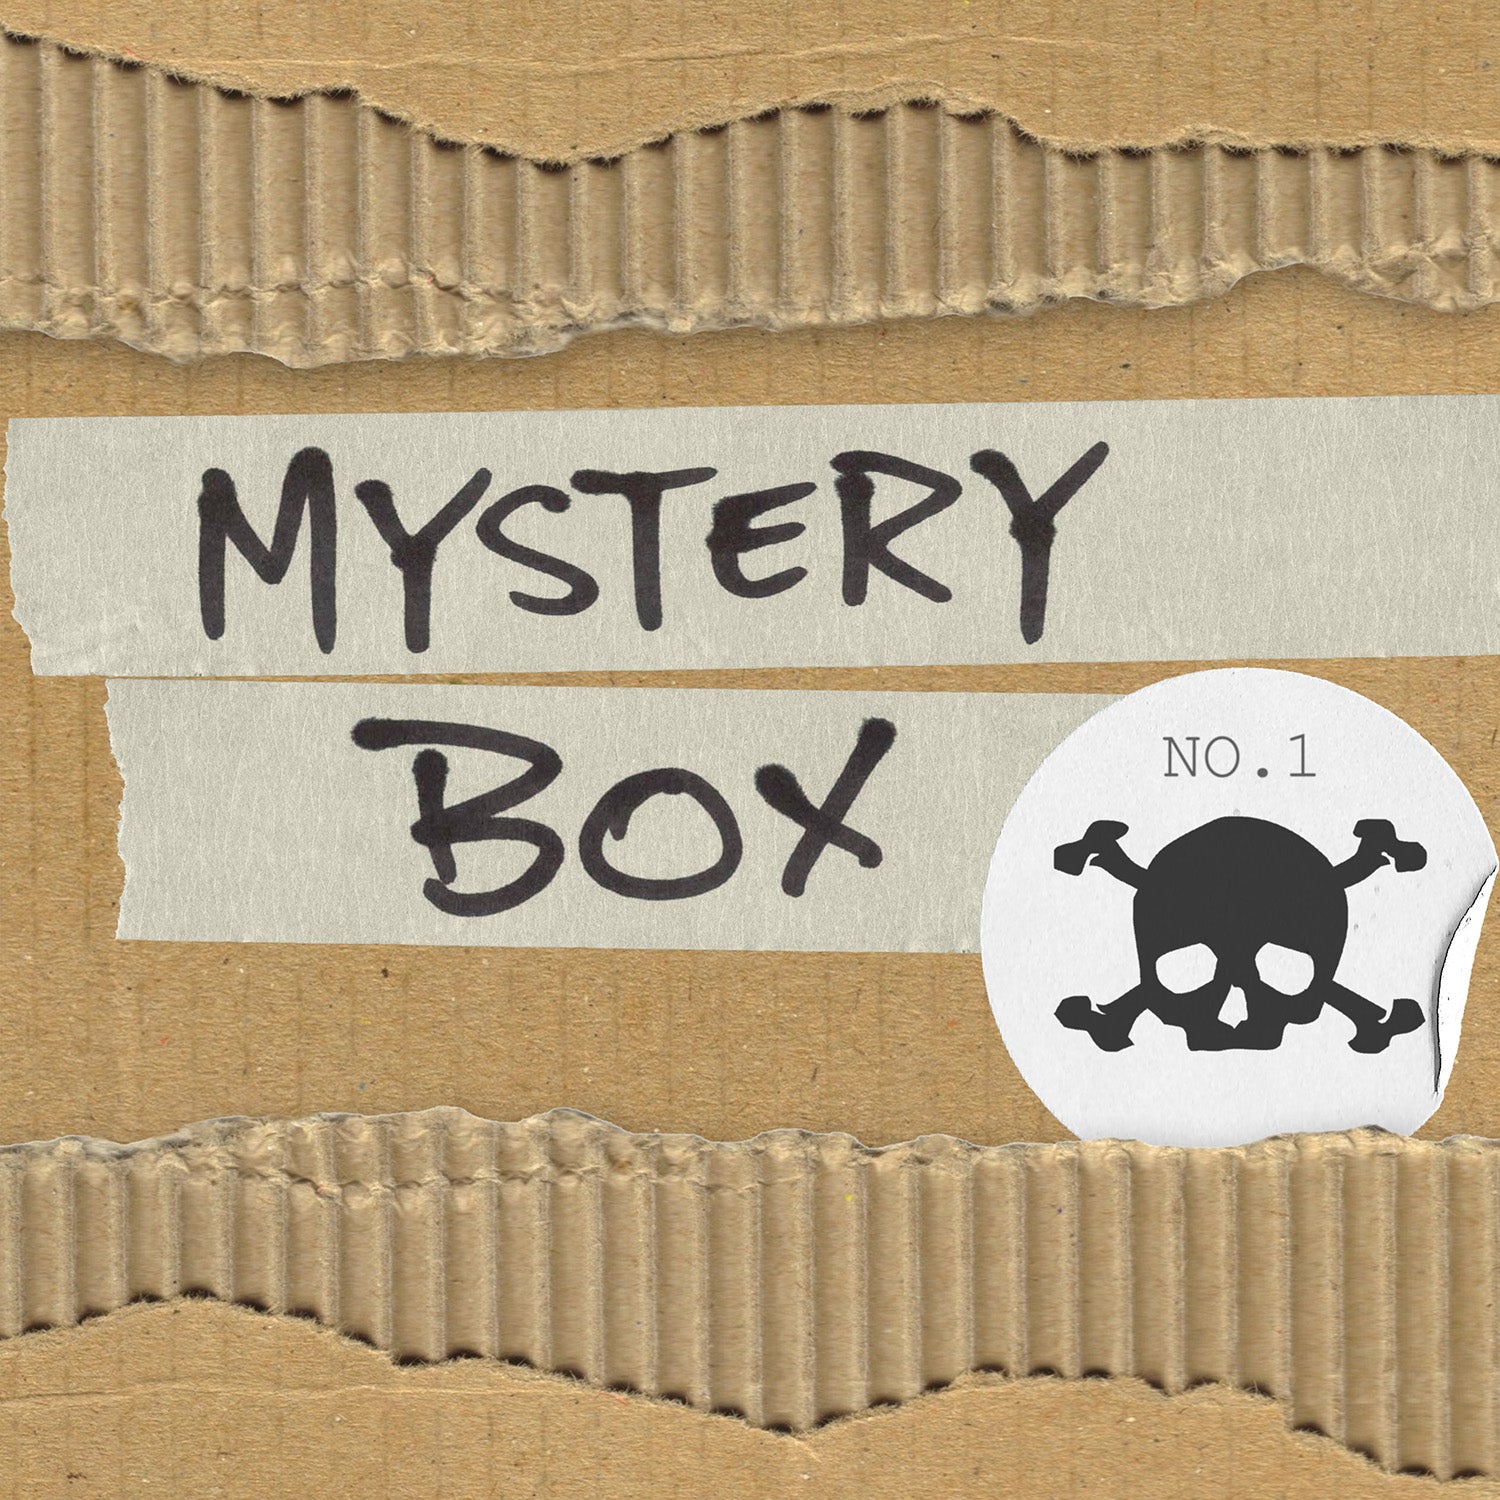 $50 Mystery Box